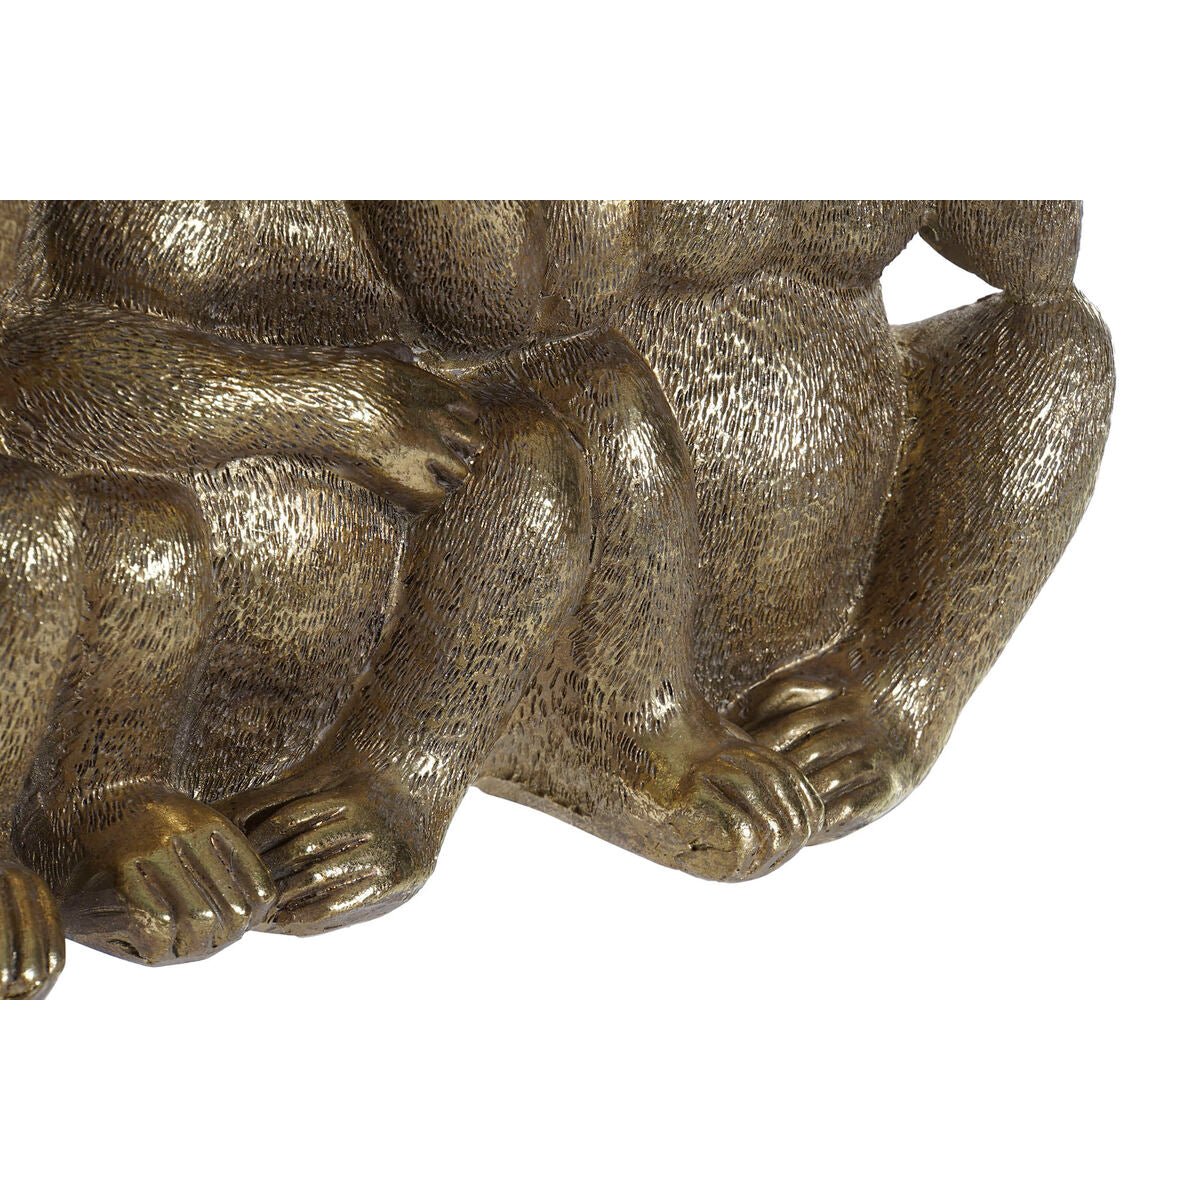 Kolme kultaista apinaa 28,5 x 11 x 19,6 cm